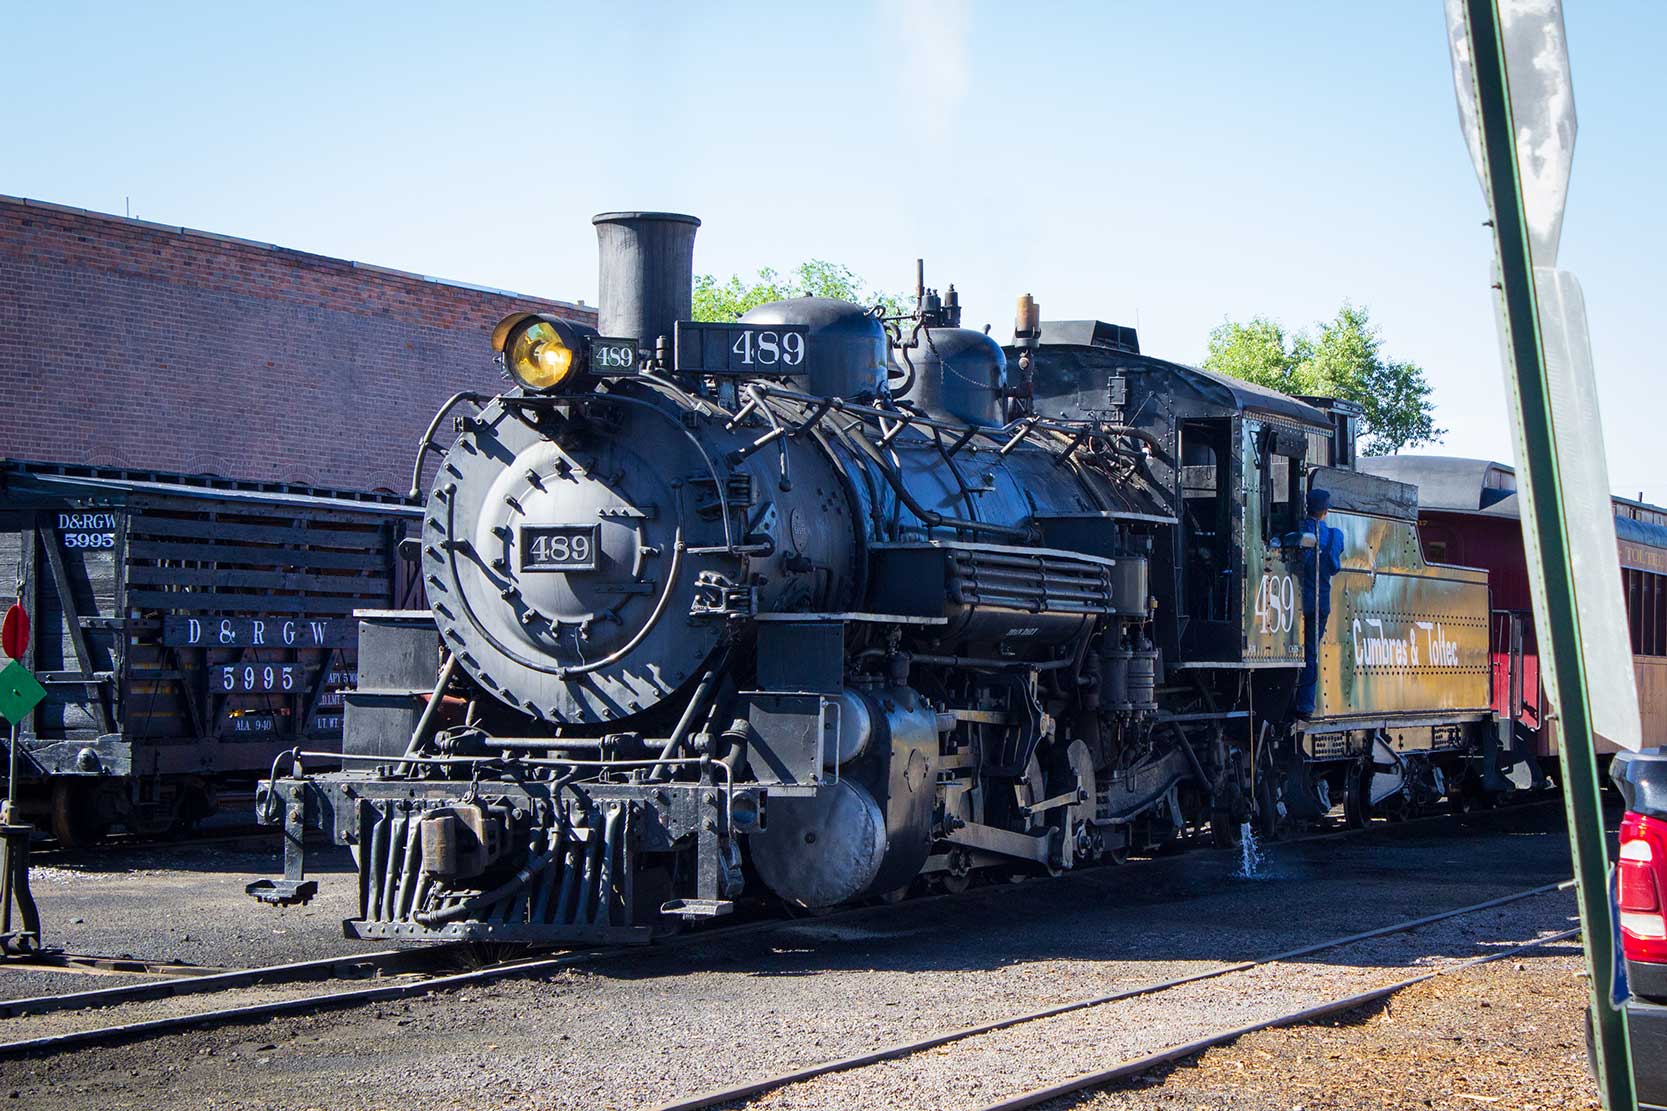 A steam train sits in a train yard